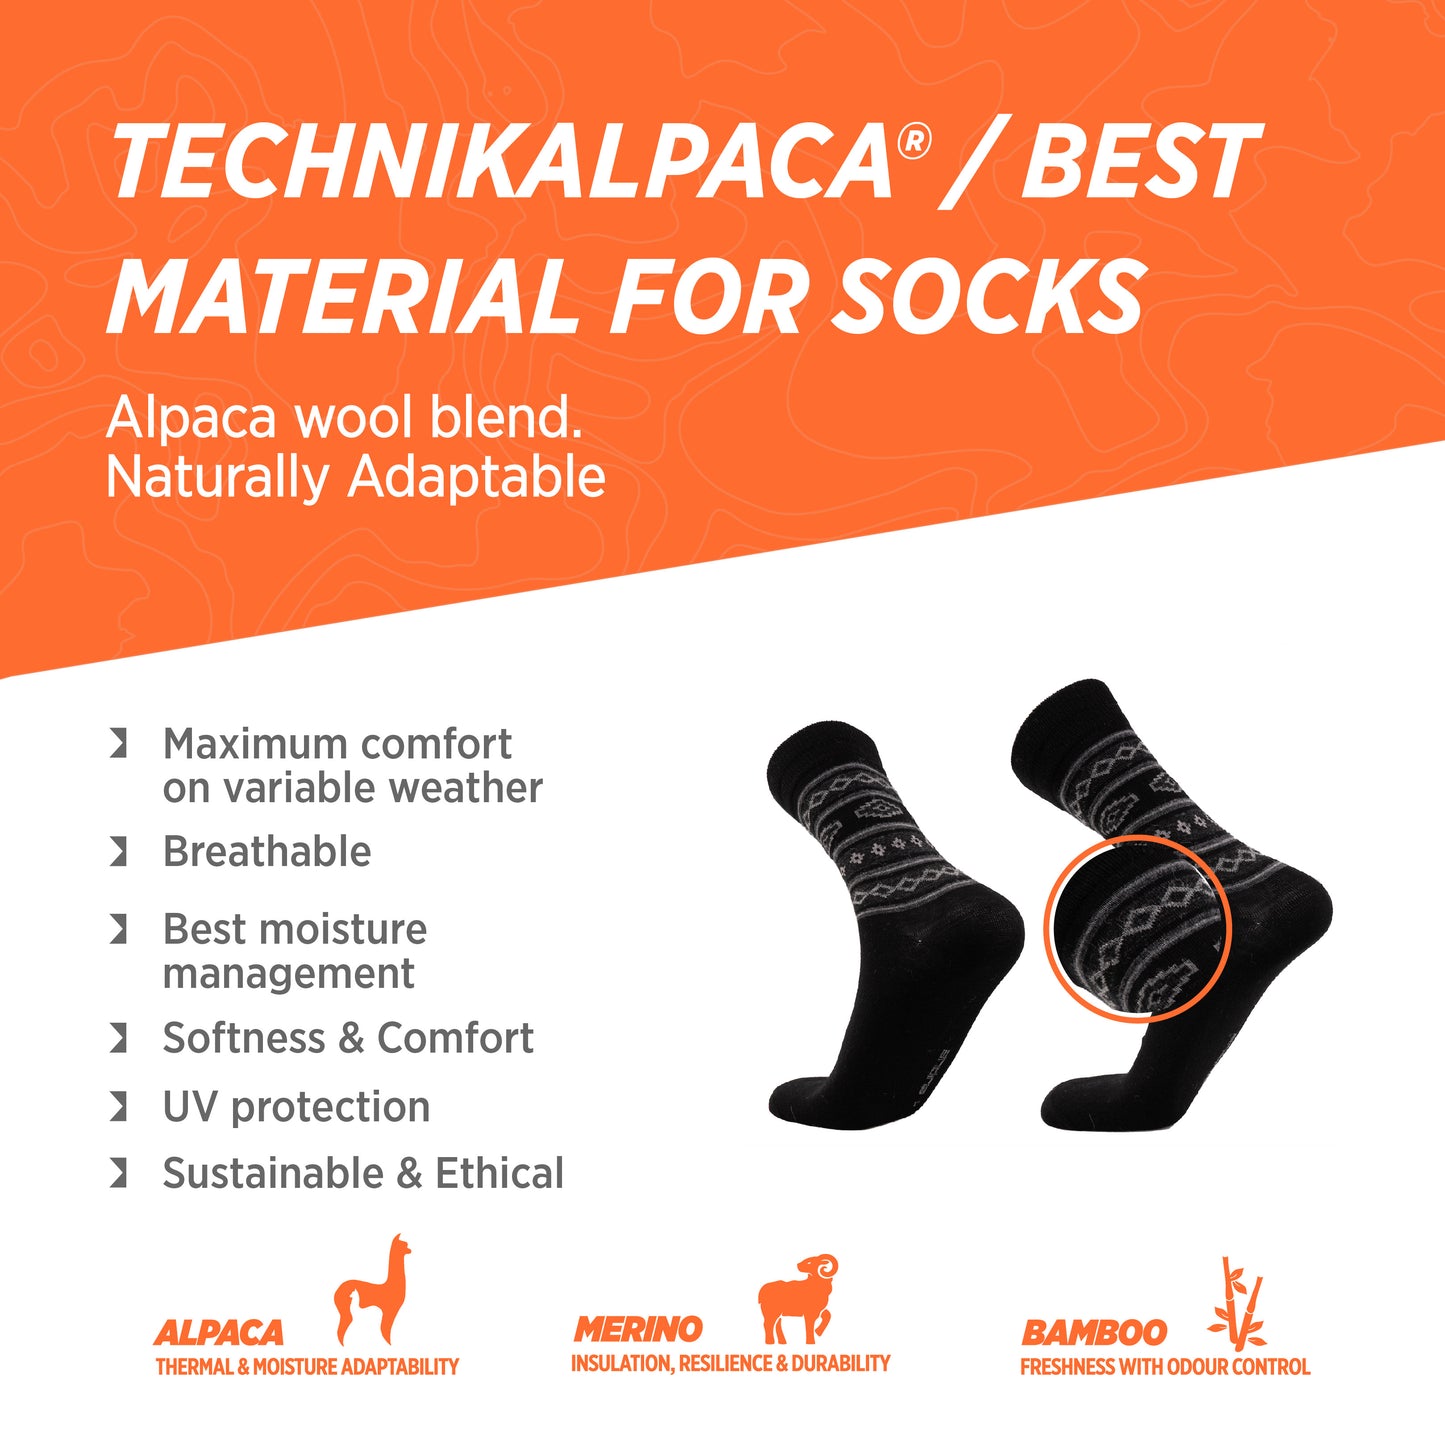 Baby Alpaca Merino Socks City Socks | Inka Cross